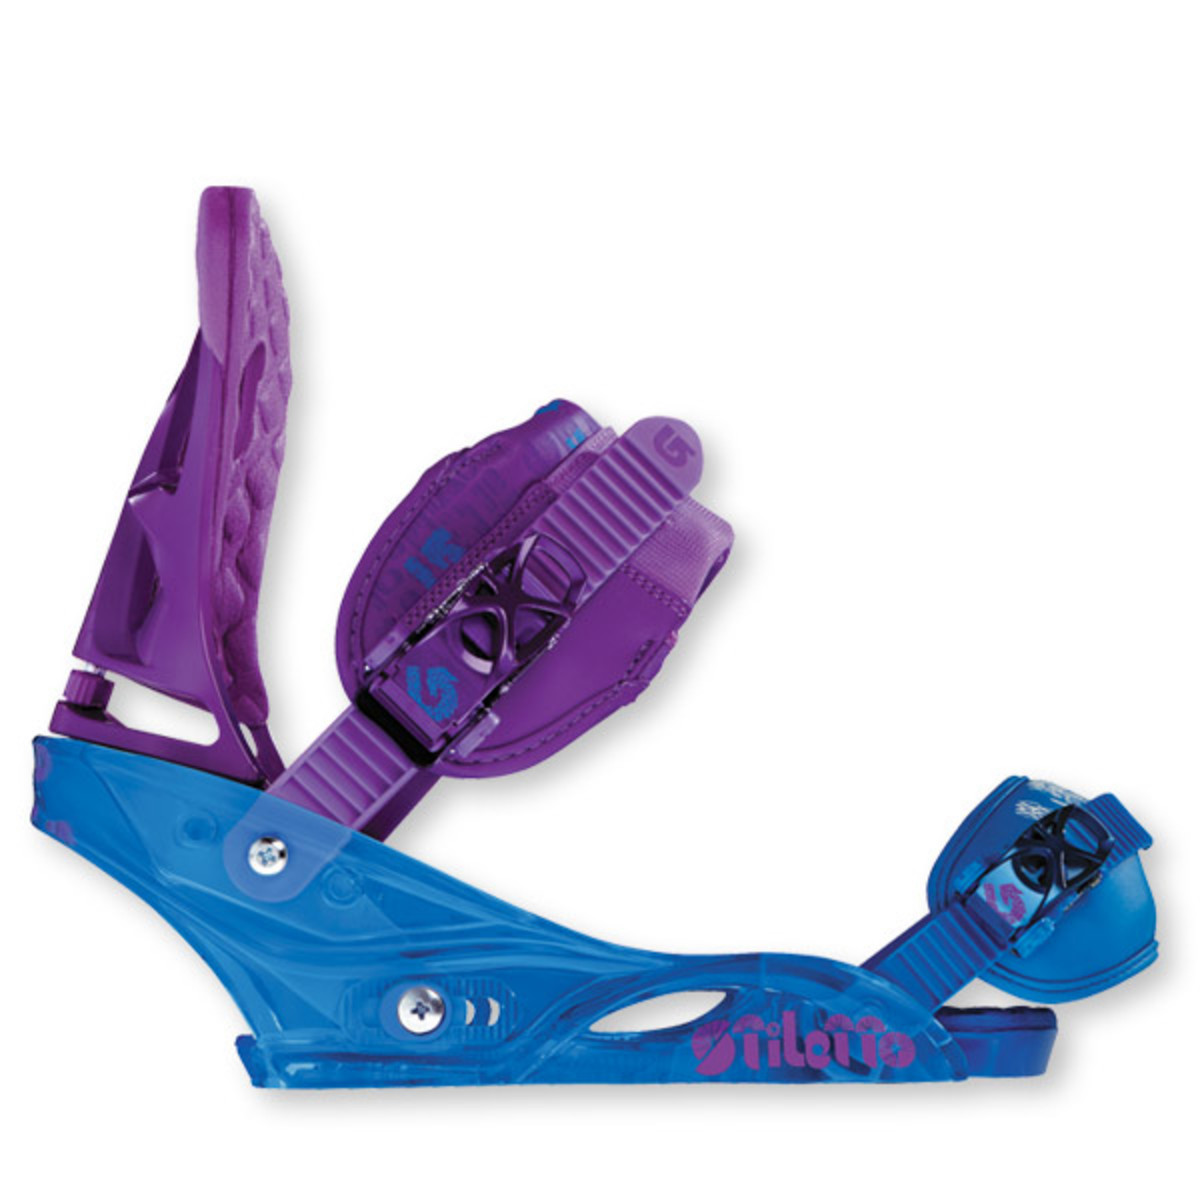 Buy Burton Stiletto Women's Bindings - Shop for Snowboard Gear at ...